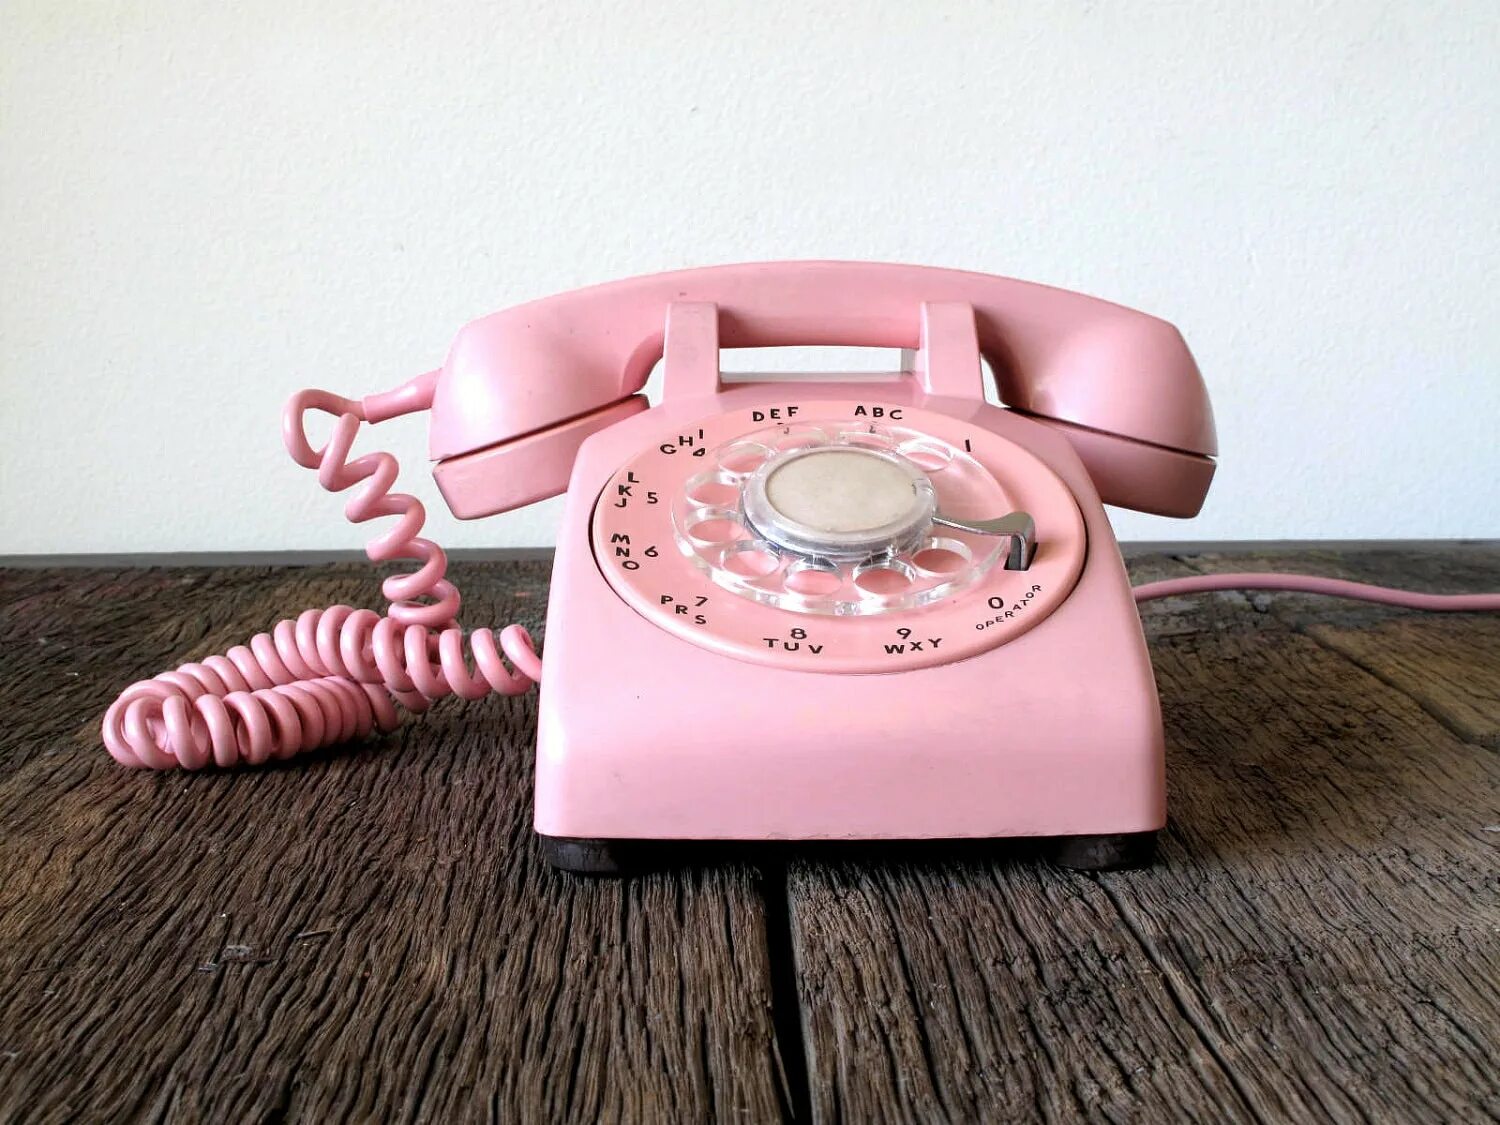 Розовый телефон фото. Розовый телефон. Домашний телефон розовый. Розовый мобильник. Ретро домашний телефон розового цвета.